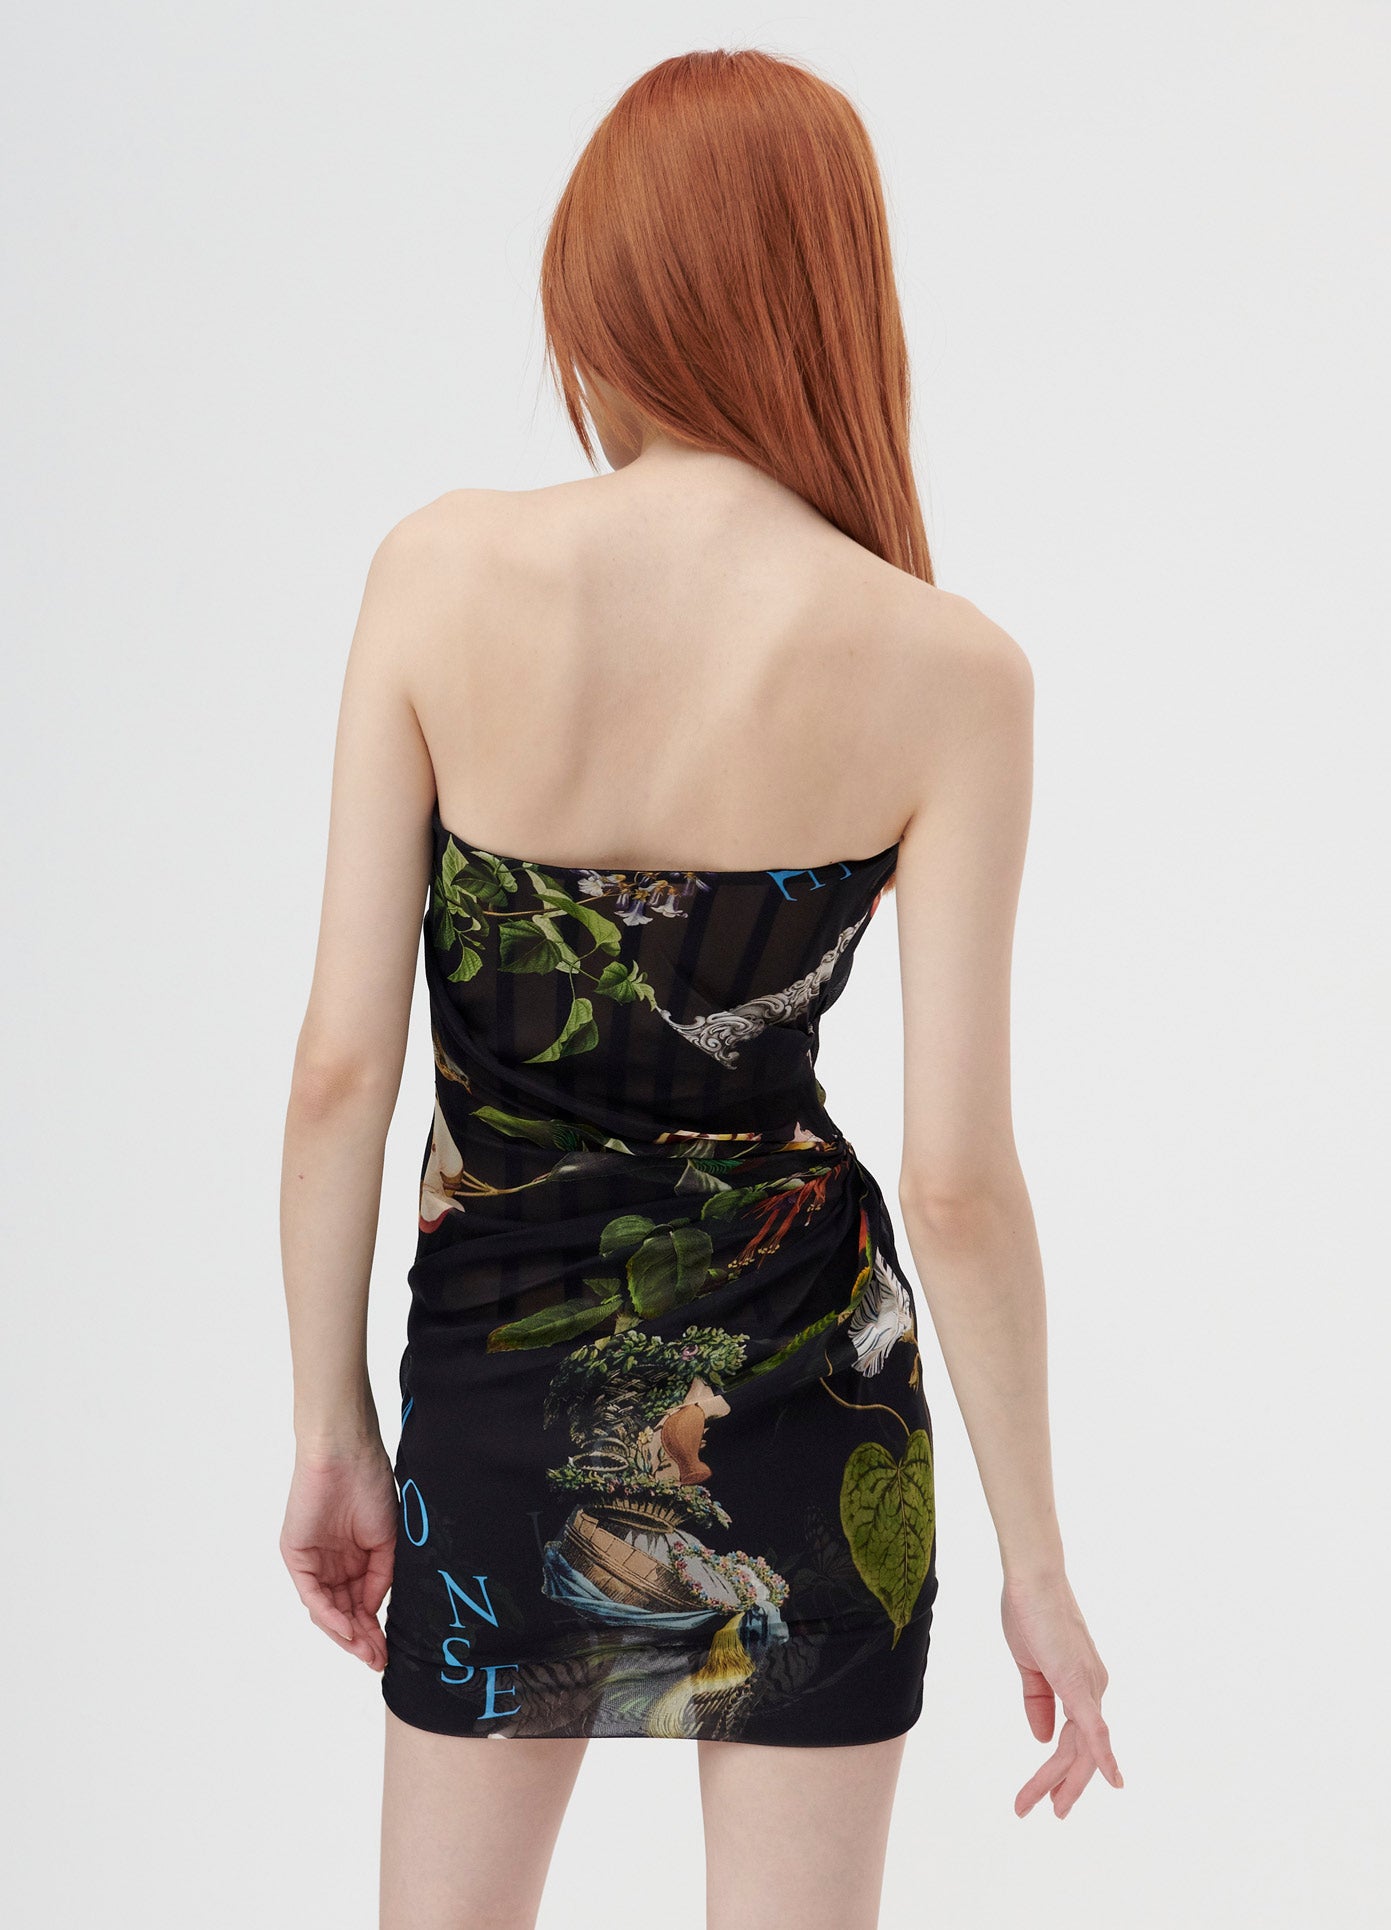 MONSE Strapless Print Draped Cocktail Dress in Black Print on Model Back View